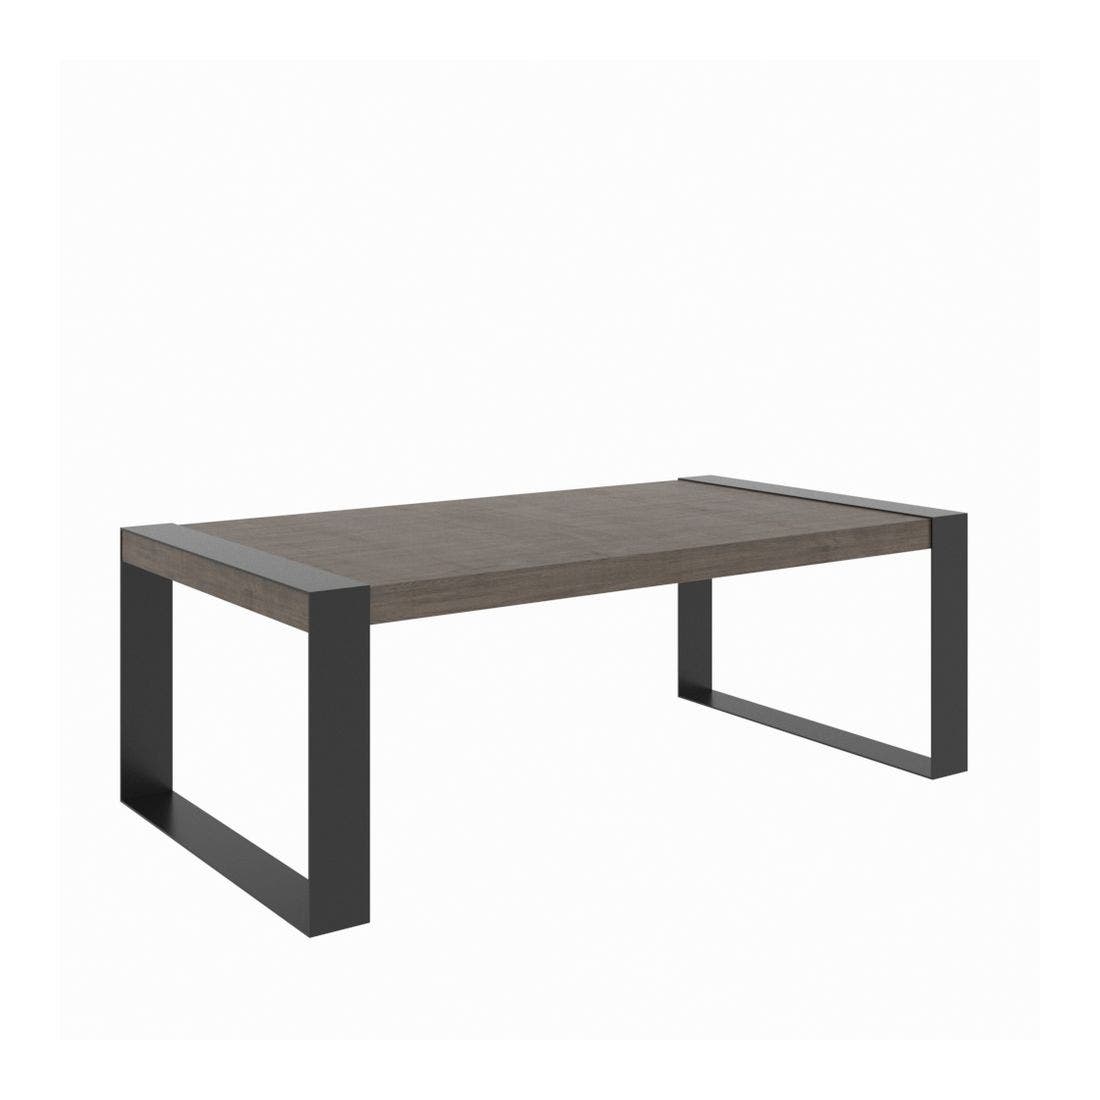 19146458-fania-furniture-living-room-coffee-table-01